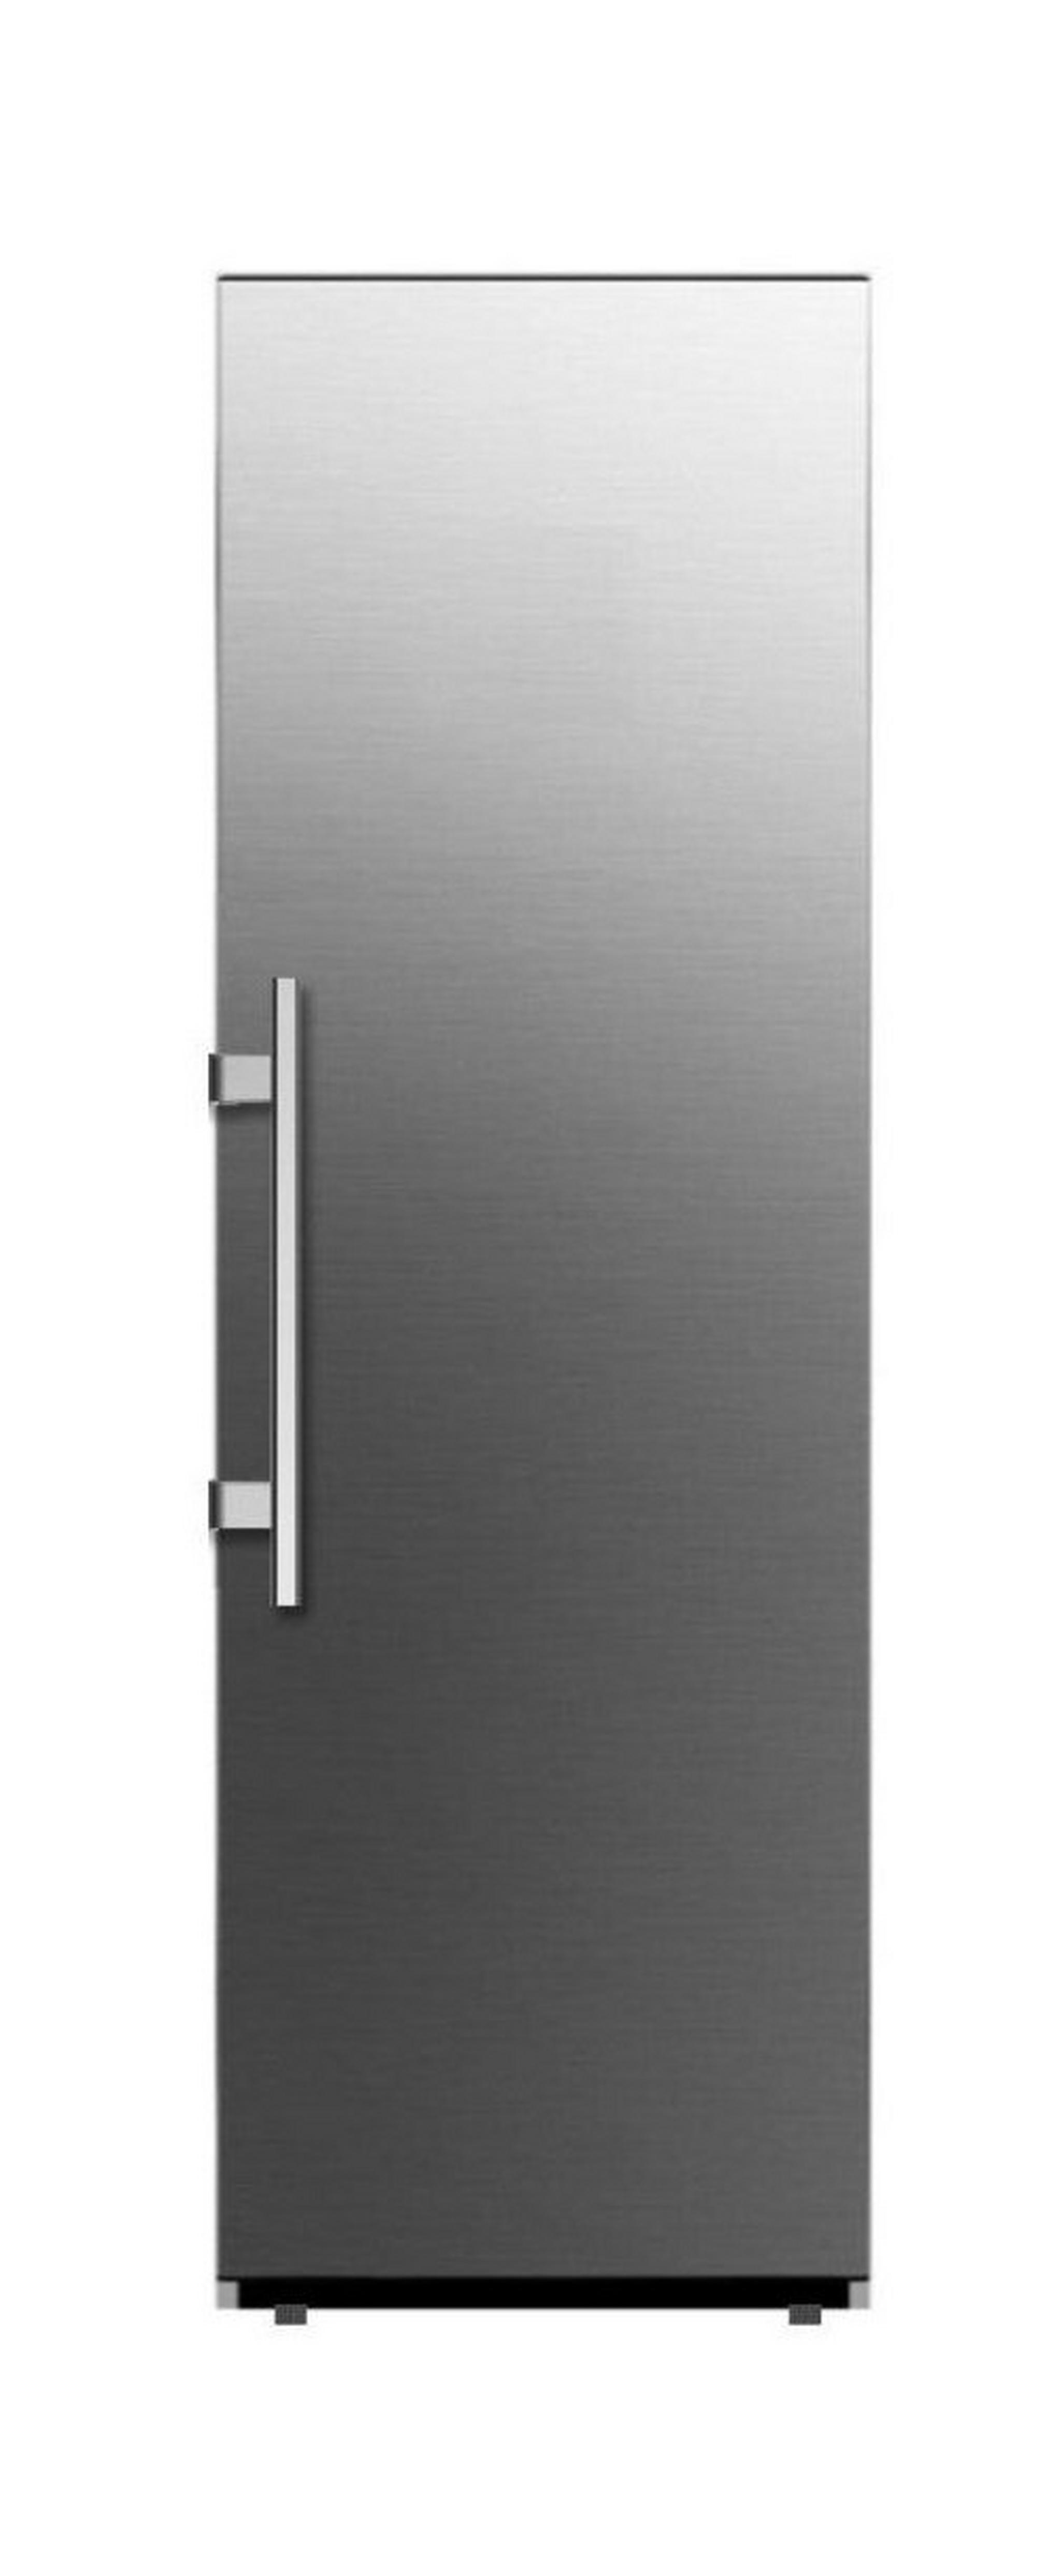 Midea 12CFT Single Door Refrigerator (HS455LWEDS) - Silver